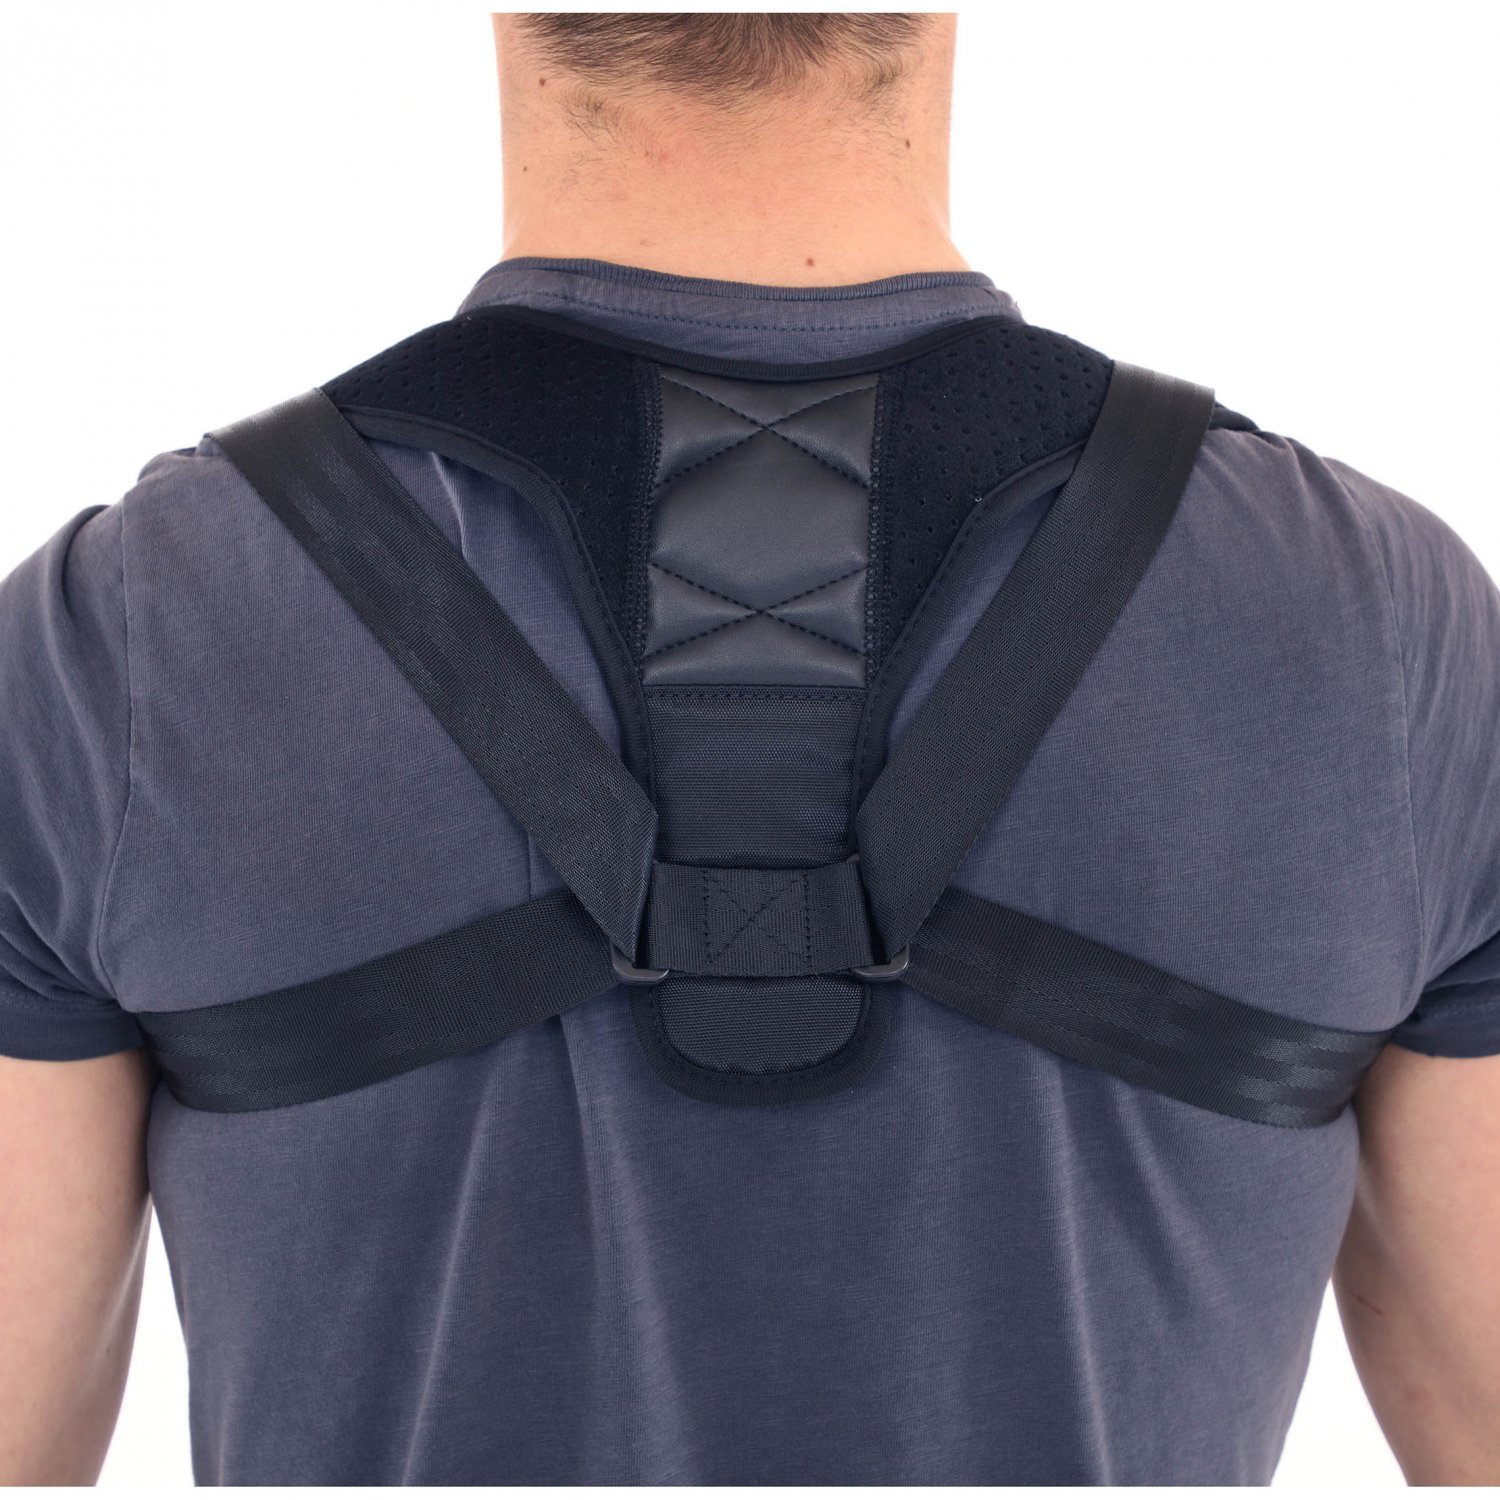 posture brace for neck and shoulder pain